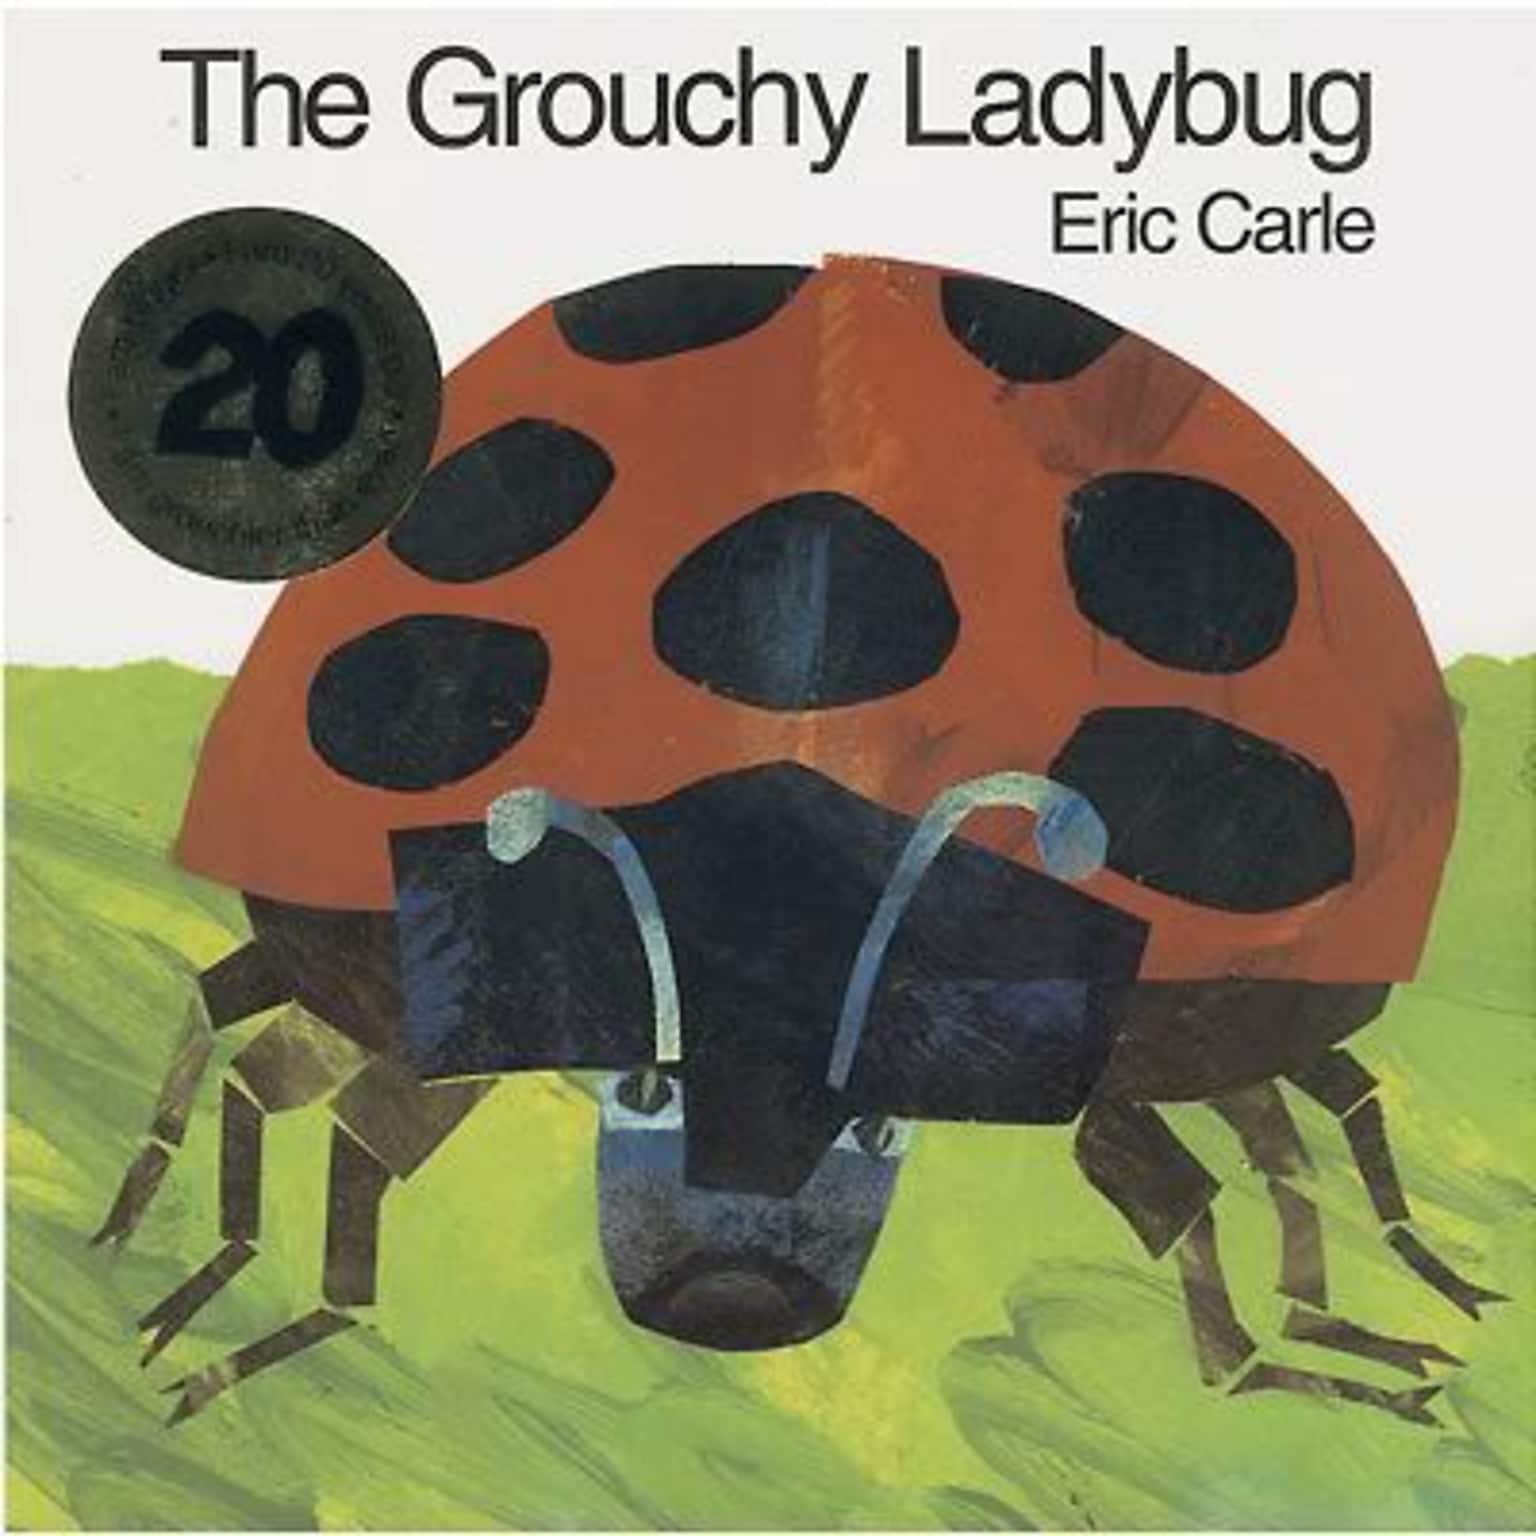 Classroom Favorite Books, The Grouchy Ladybug